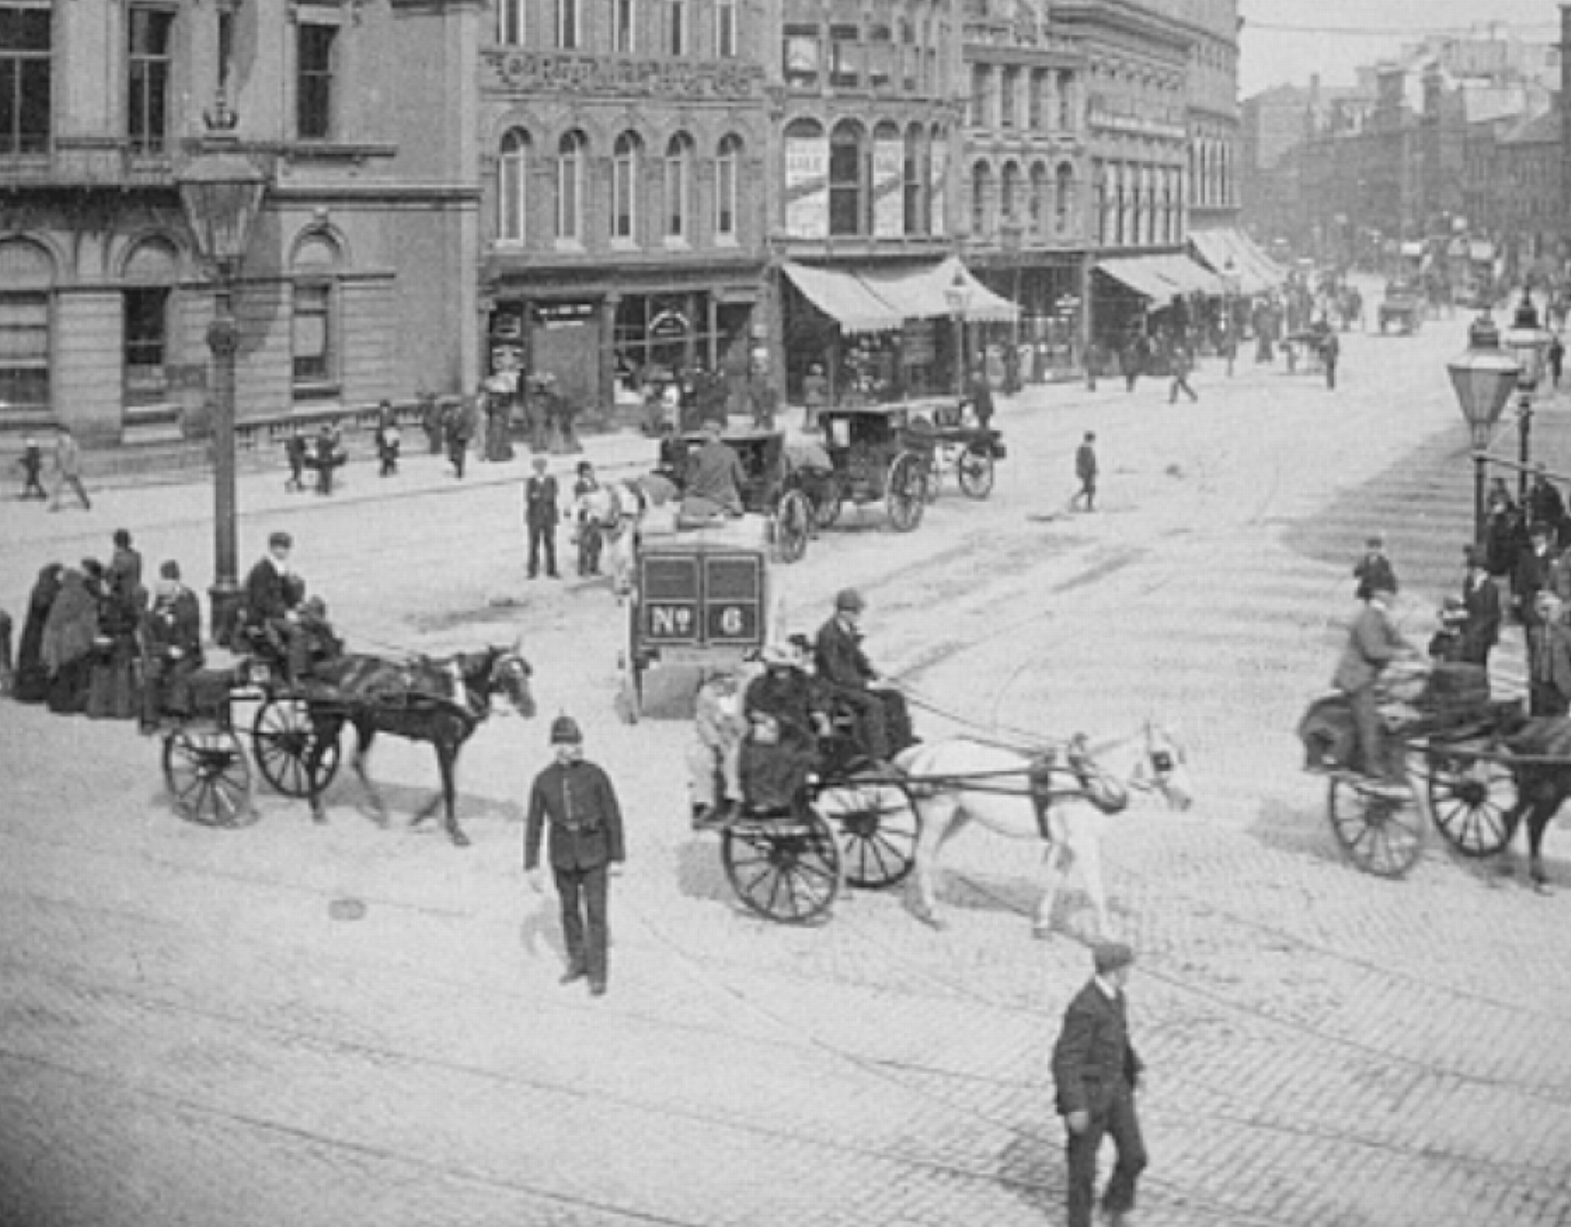 Belfast in the 19th Century: A Glimpse into the City’s Historic Past